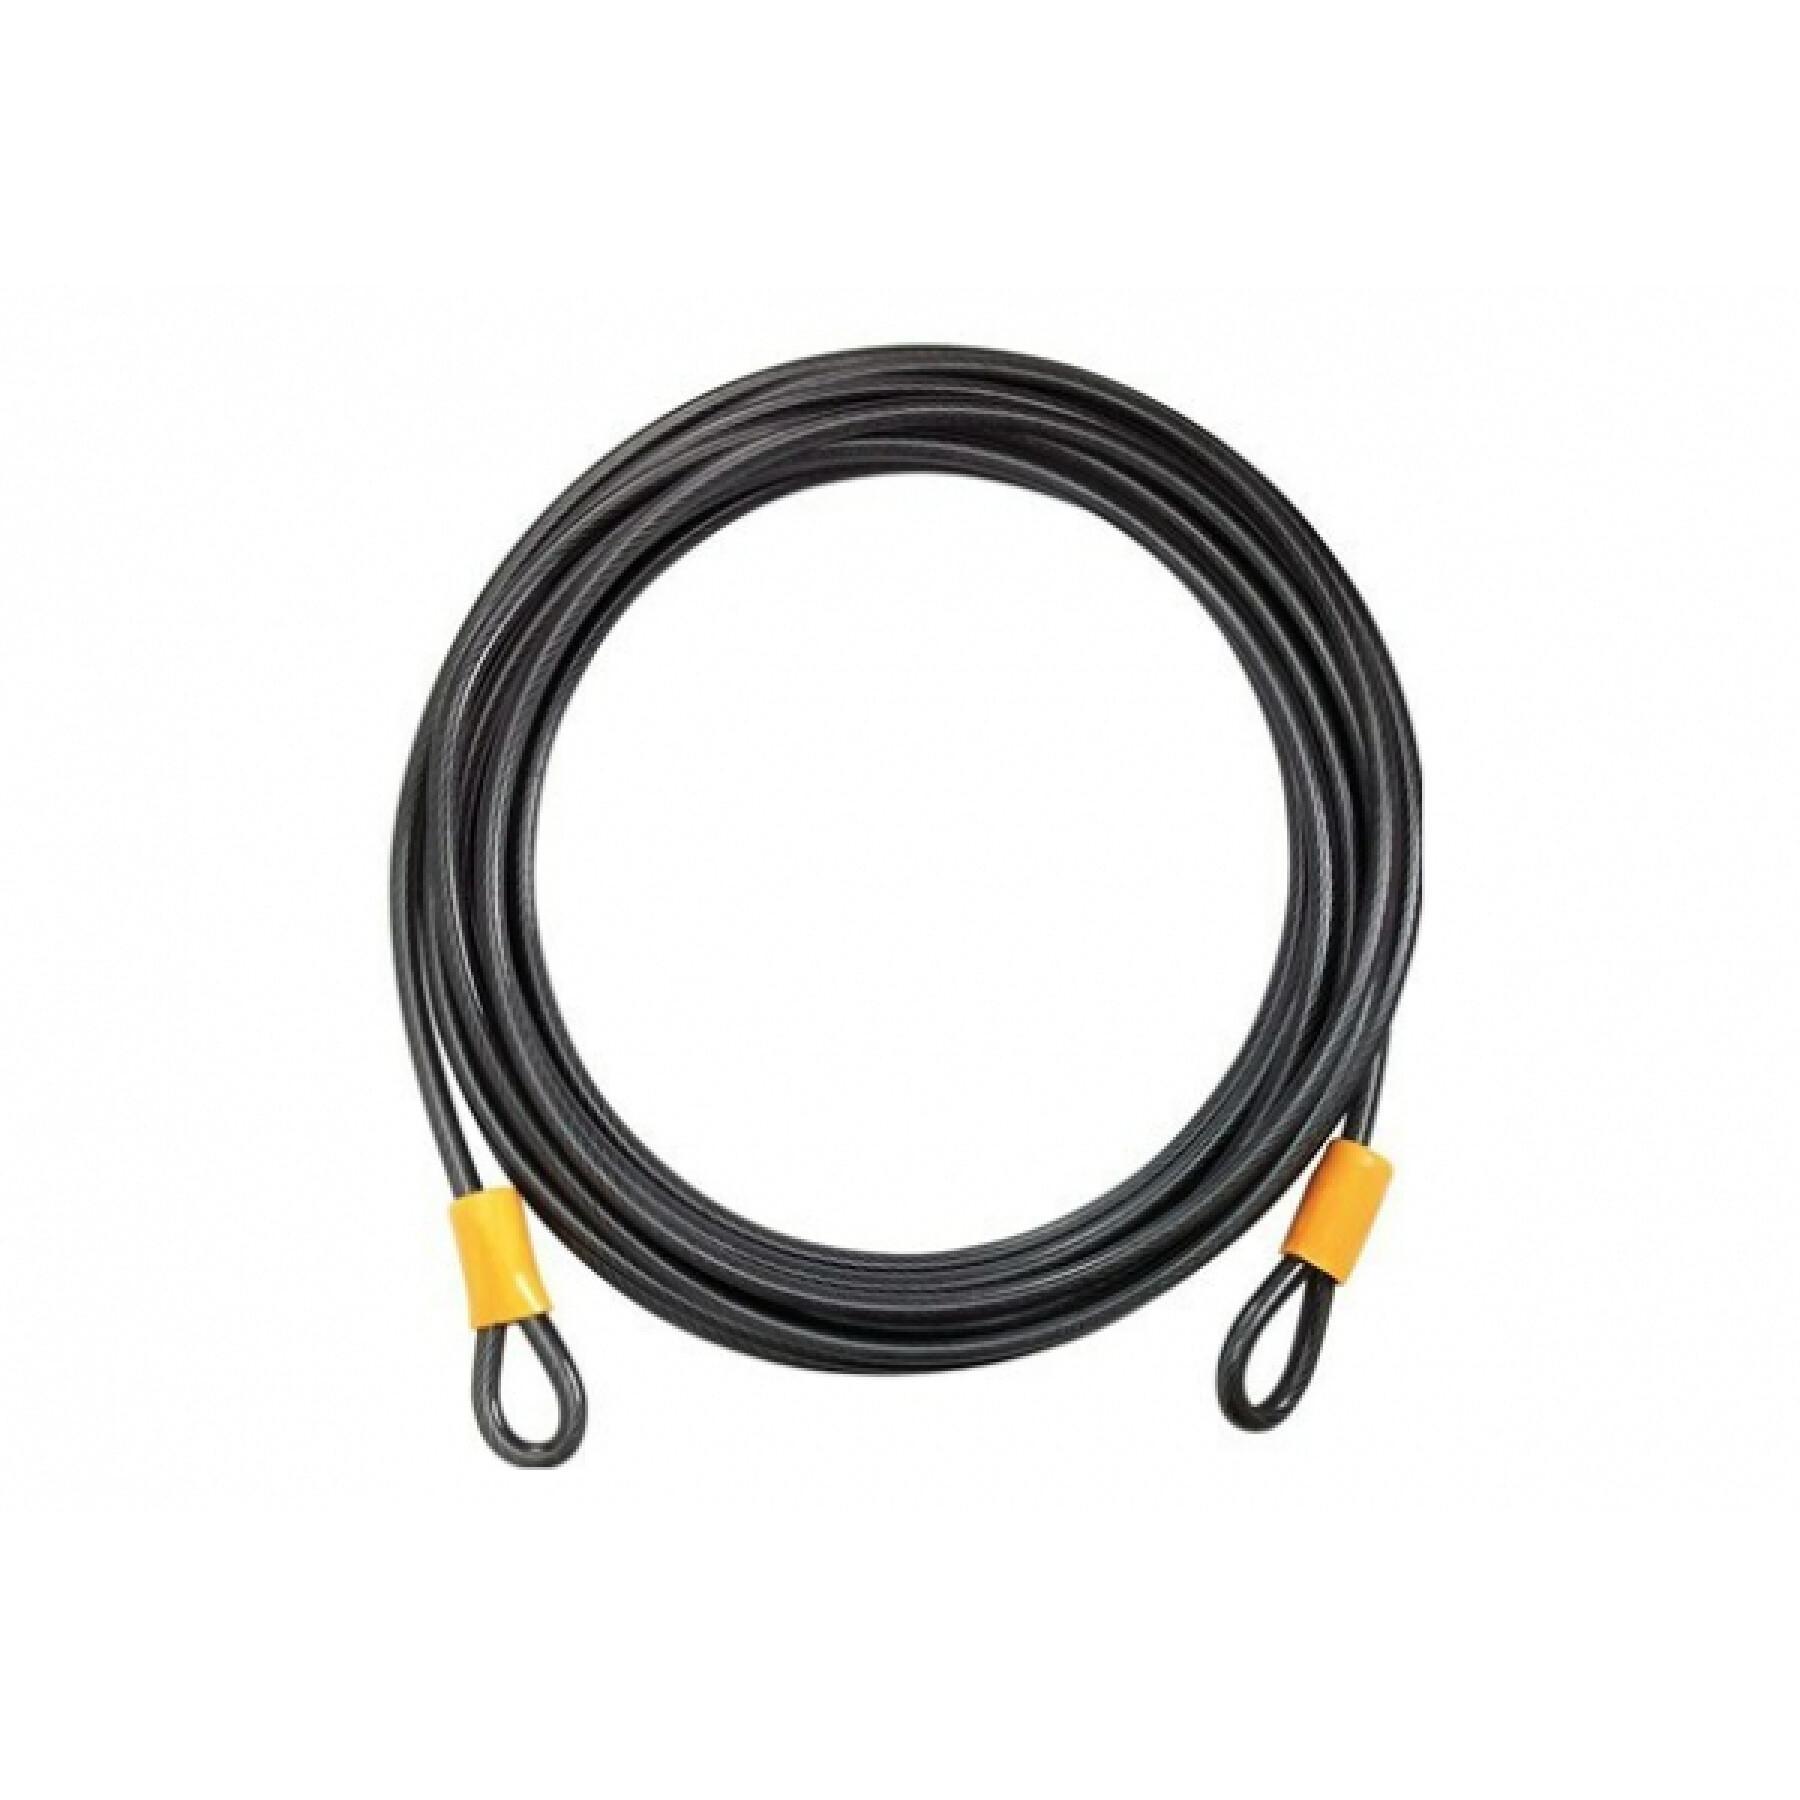 Anti-theft cable Onguard Akita 8073 900cm, Ø 10mm